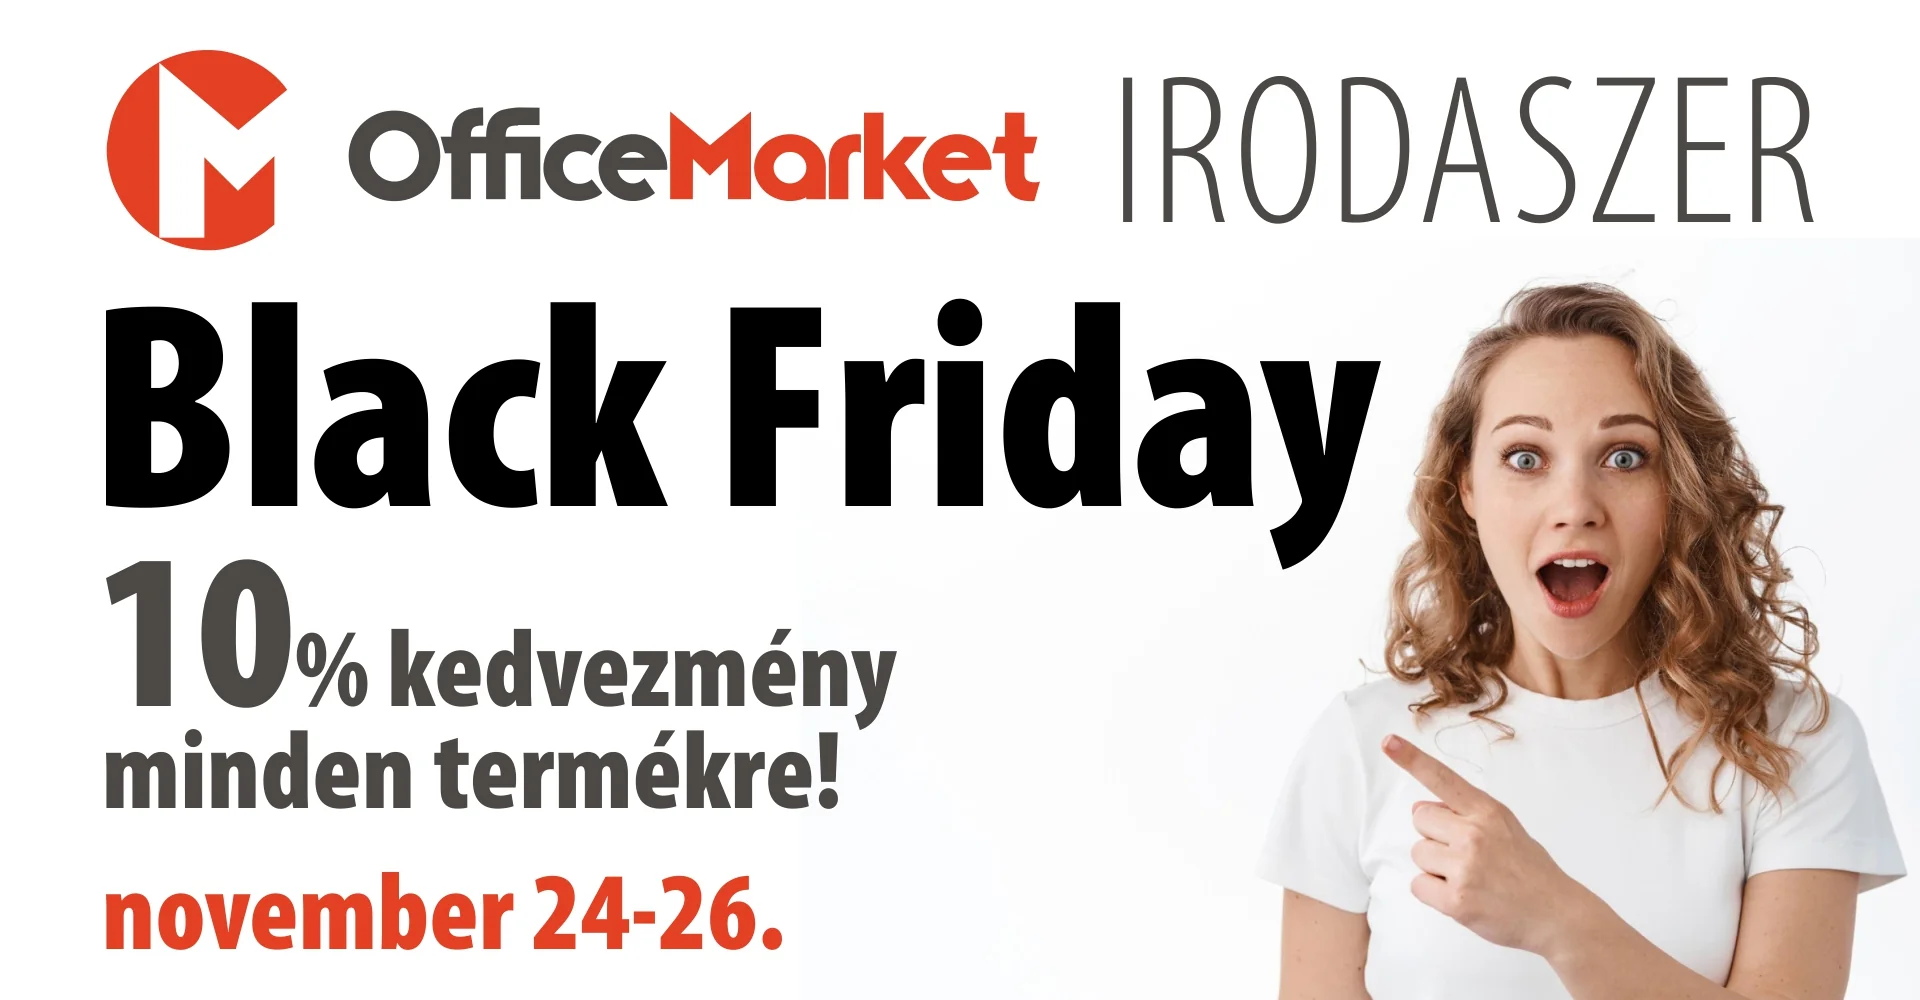 OfficeMarket Irodaszer Black Friday